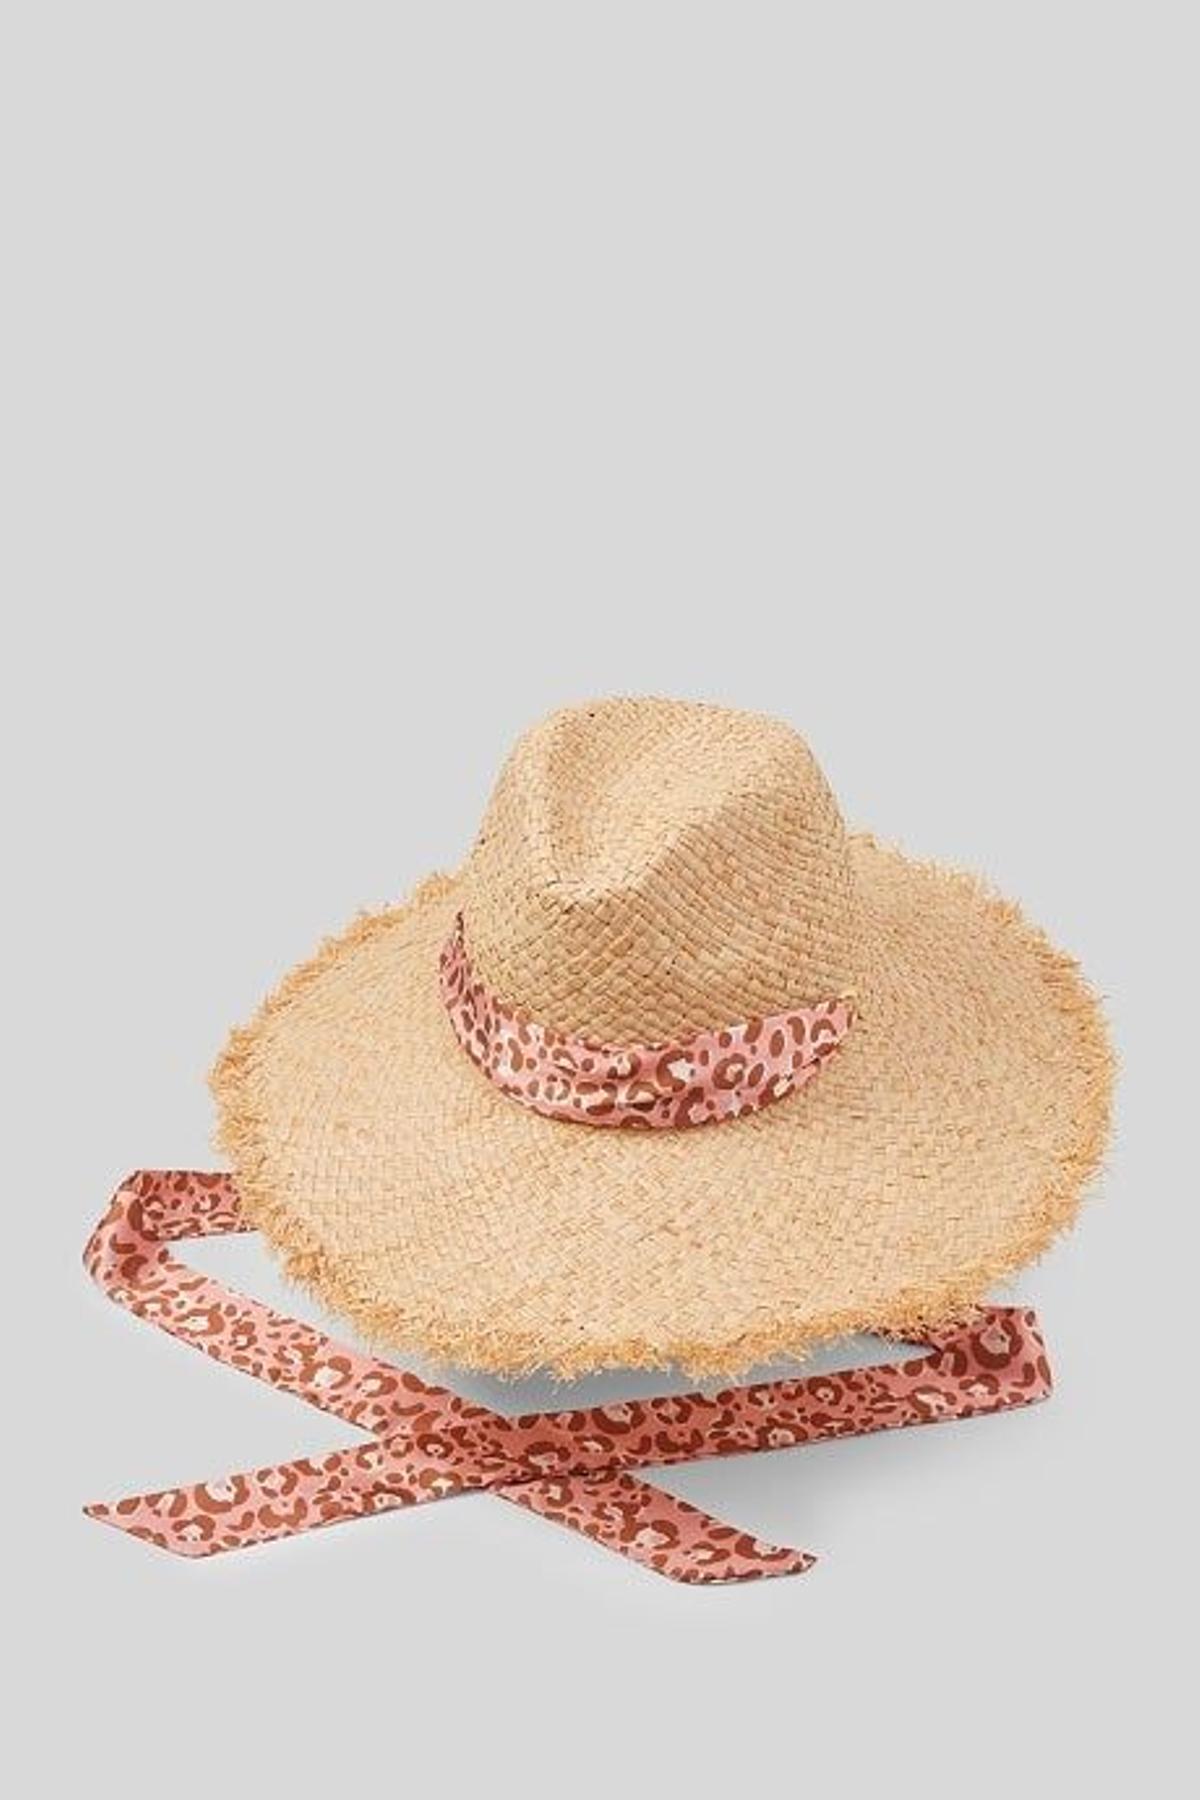 Sombrero de paja de C&amp;A (Precio: 9,99 euros)